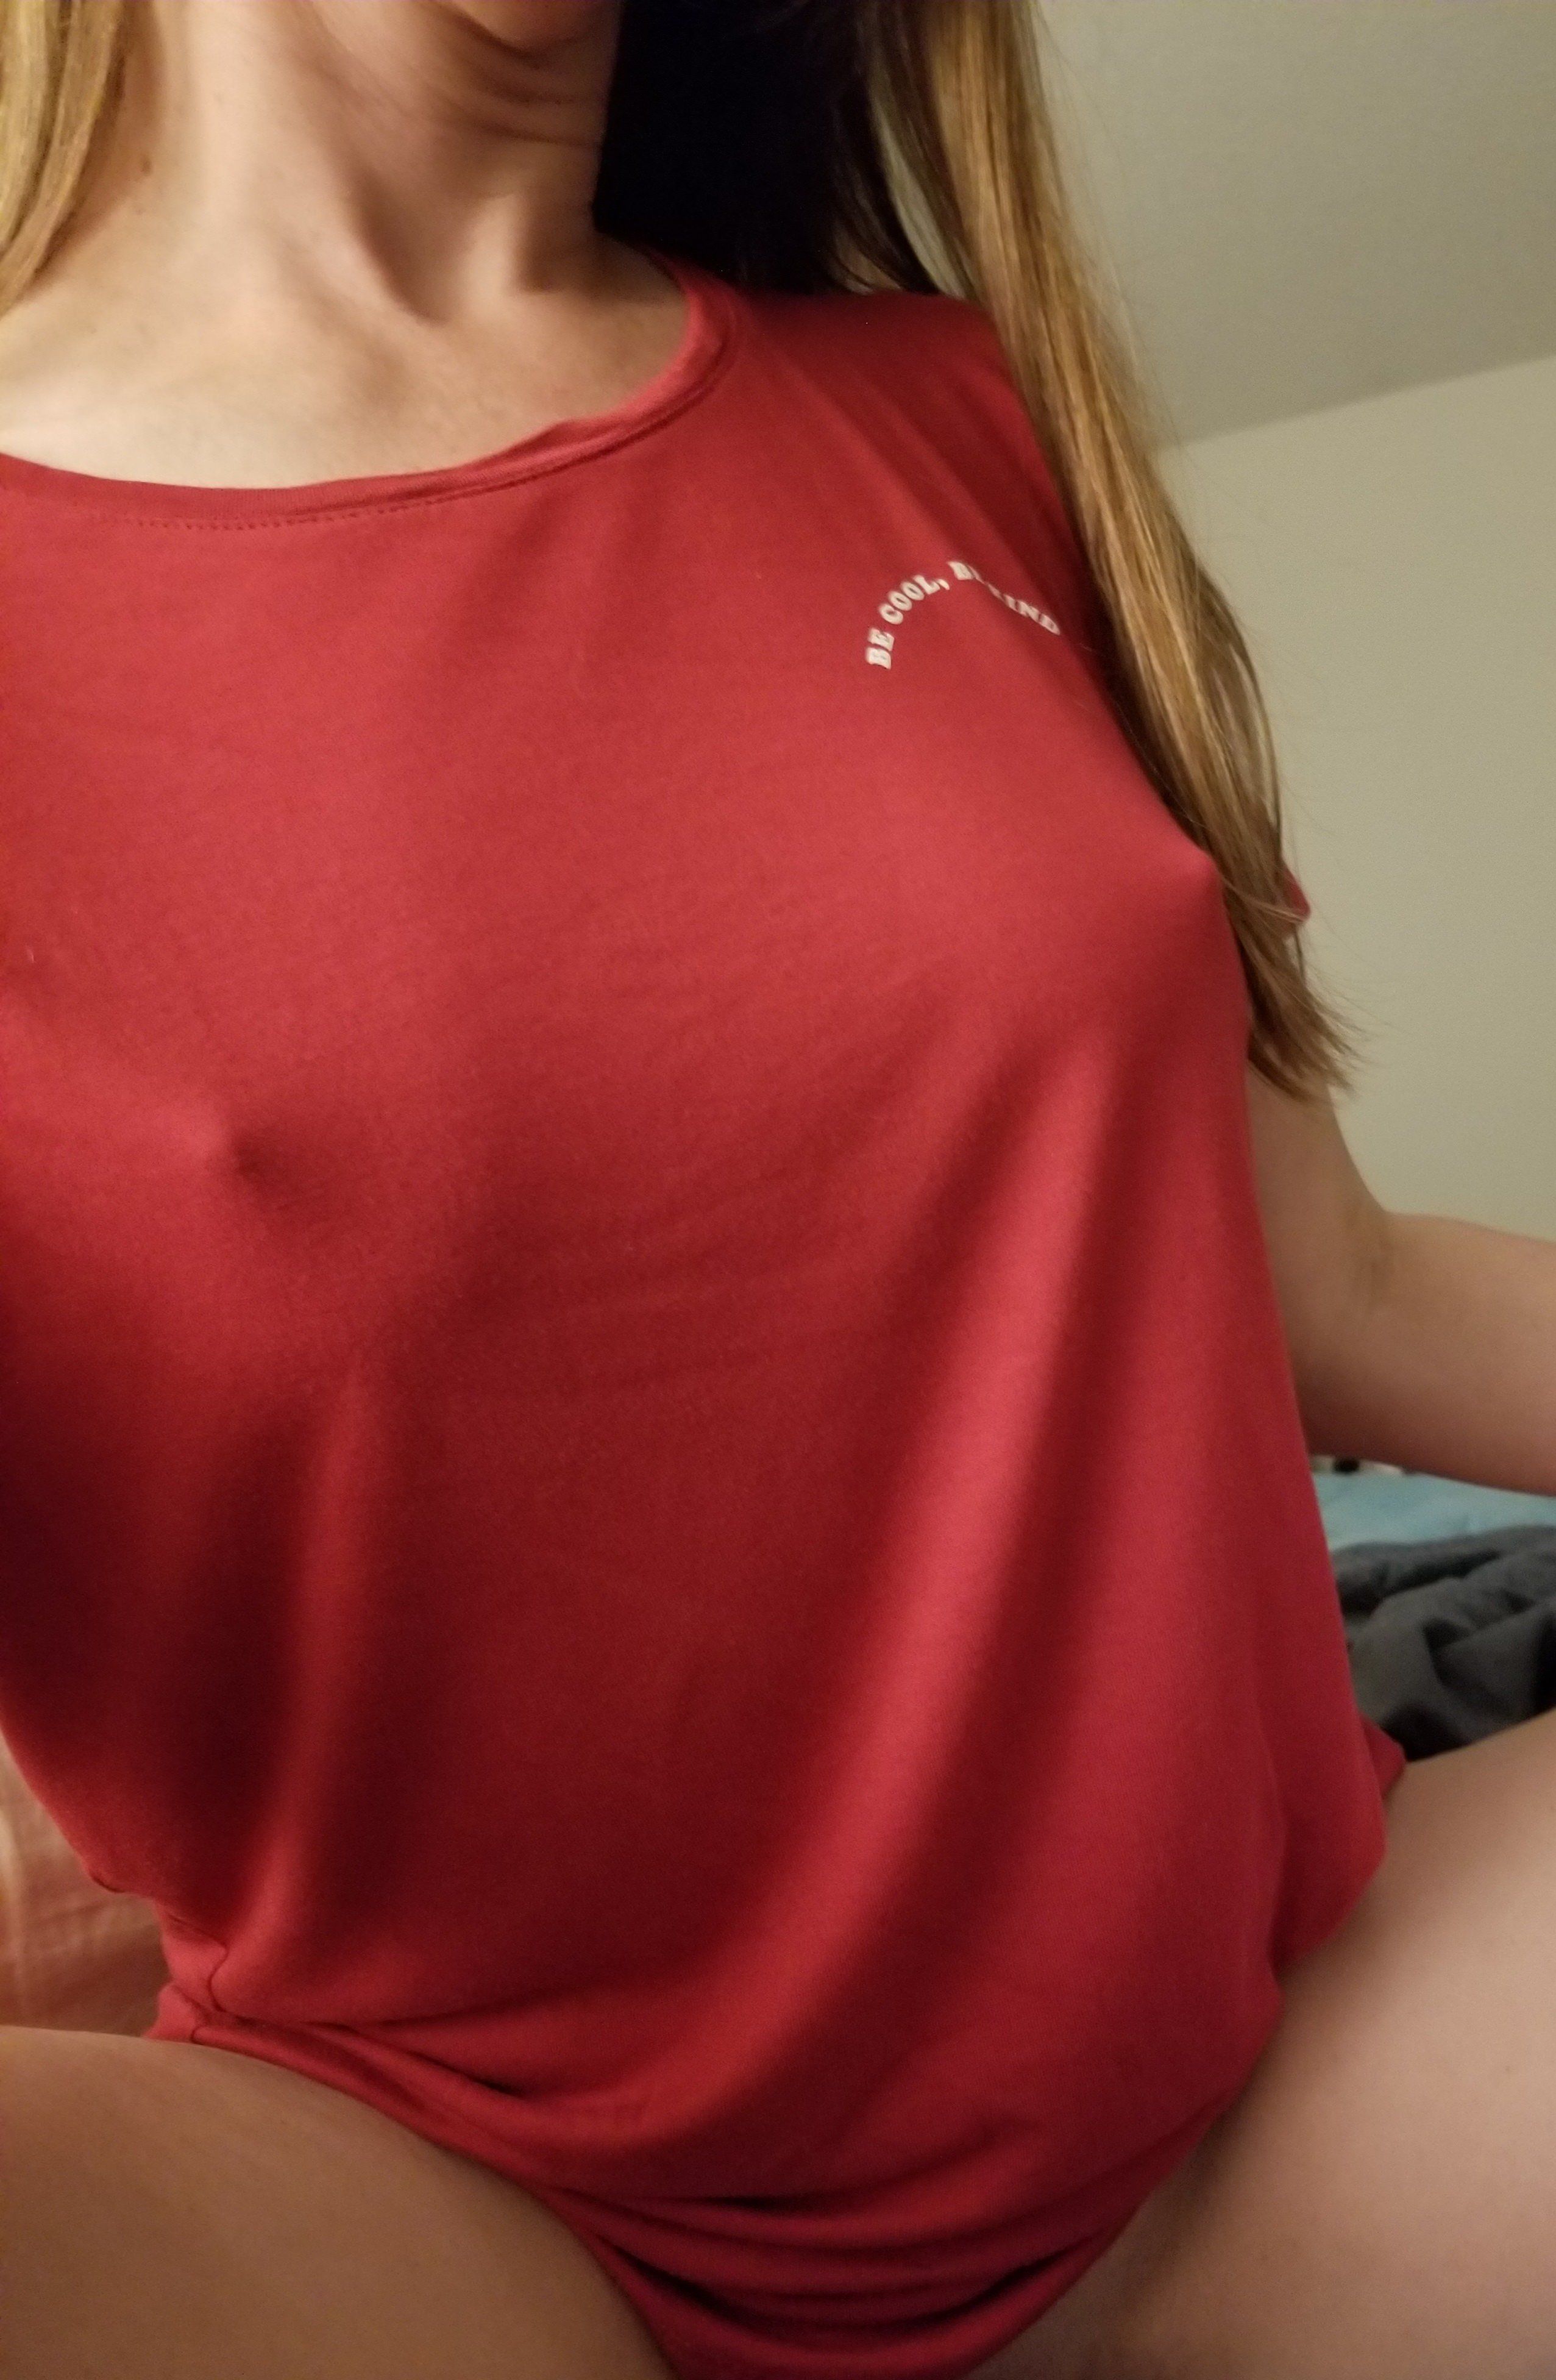 best of Shirt hard nipples